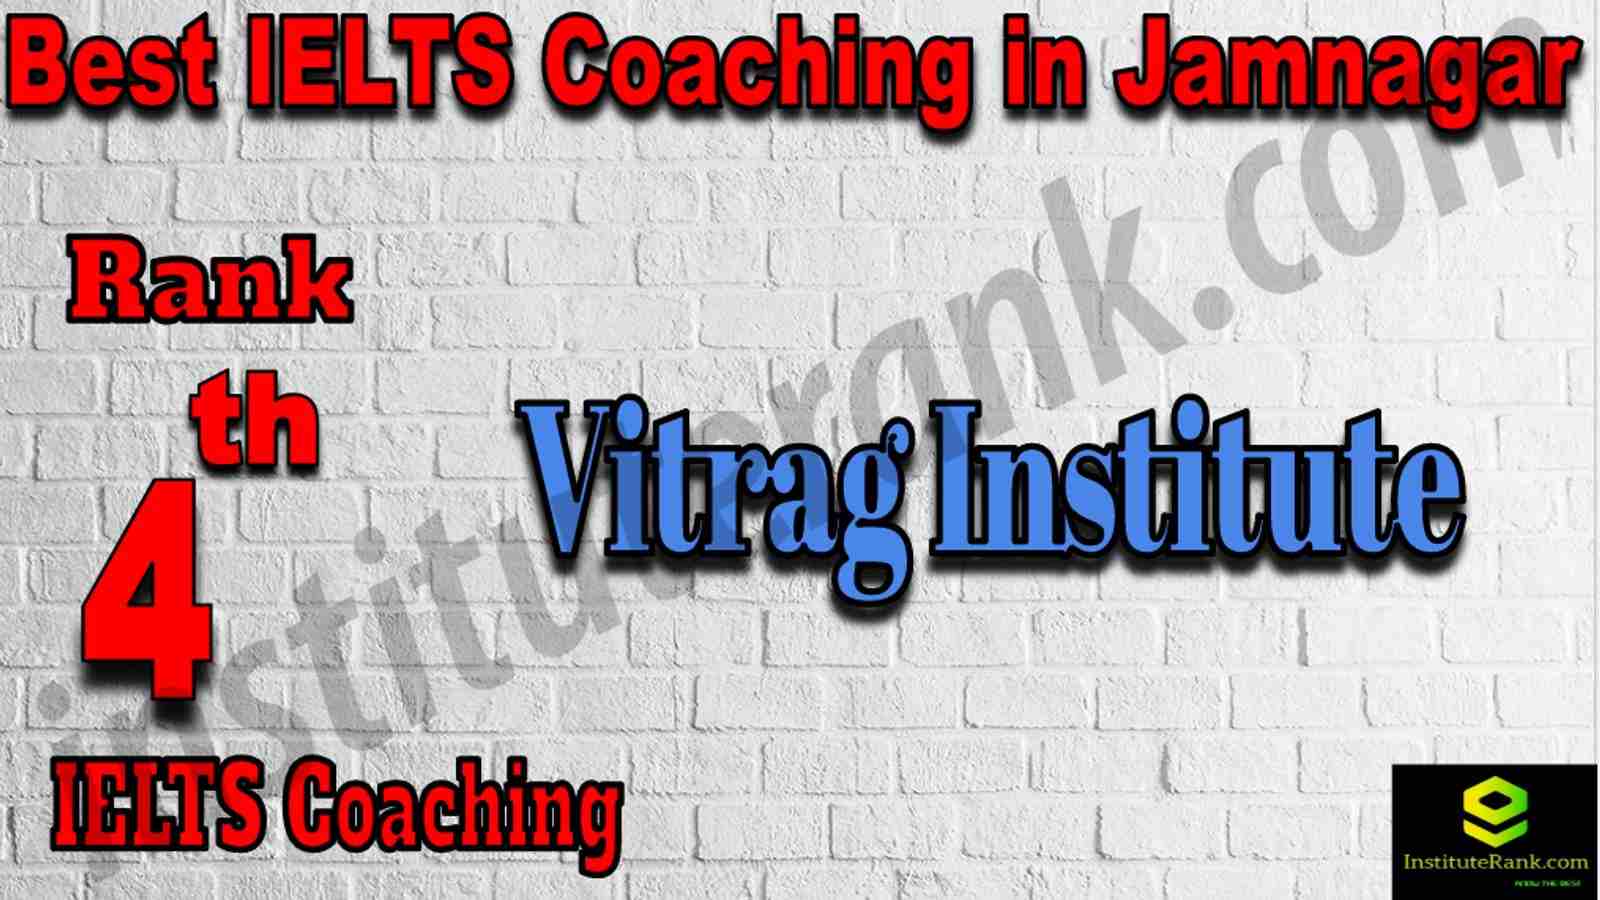 4th Best IELTS Coaching in Jamnagar